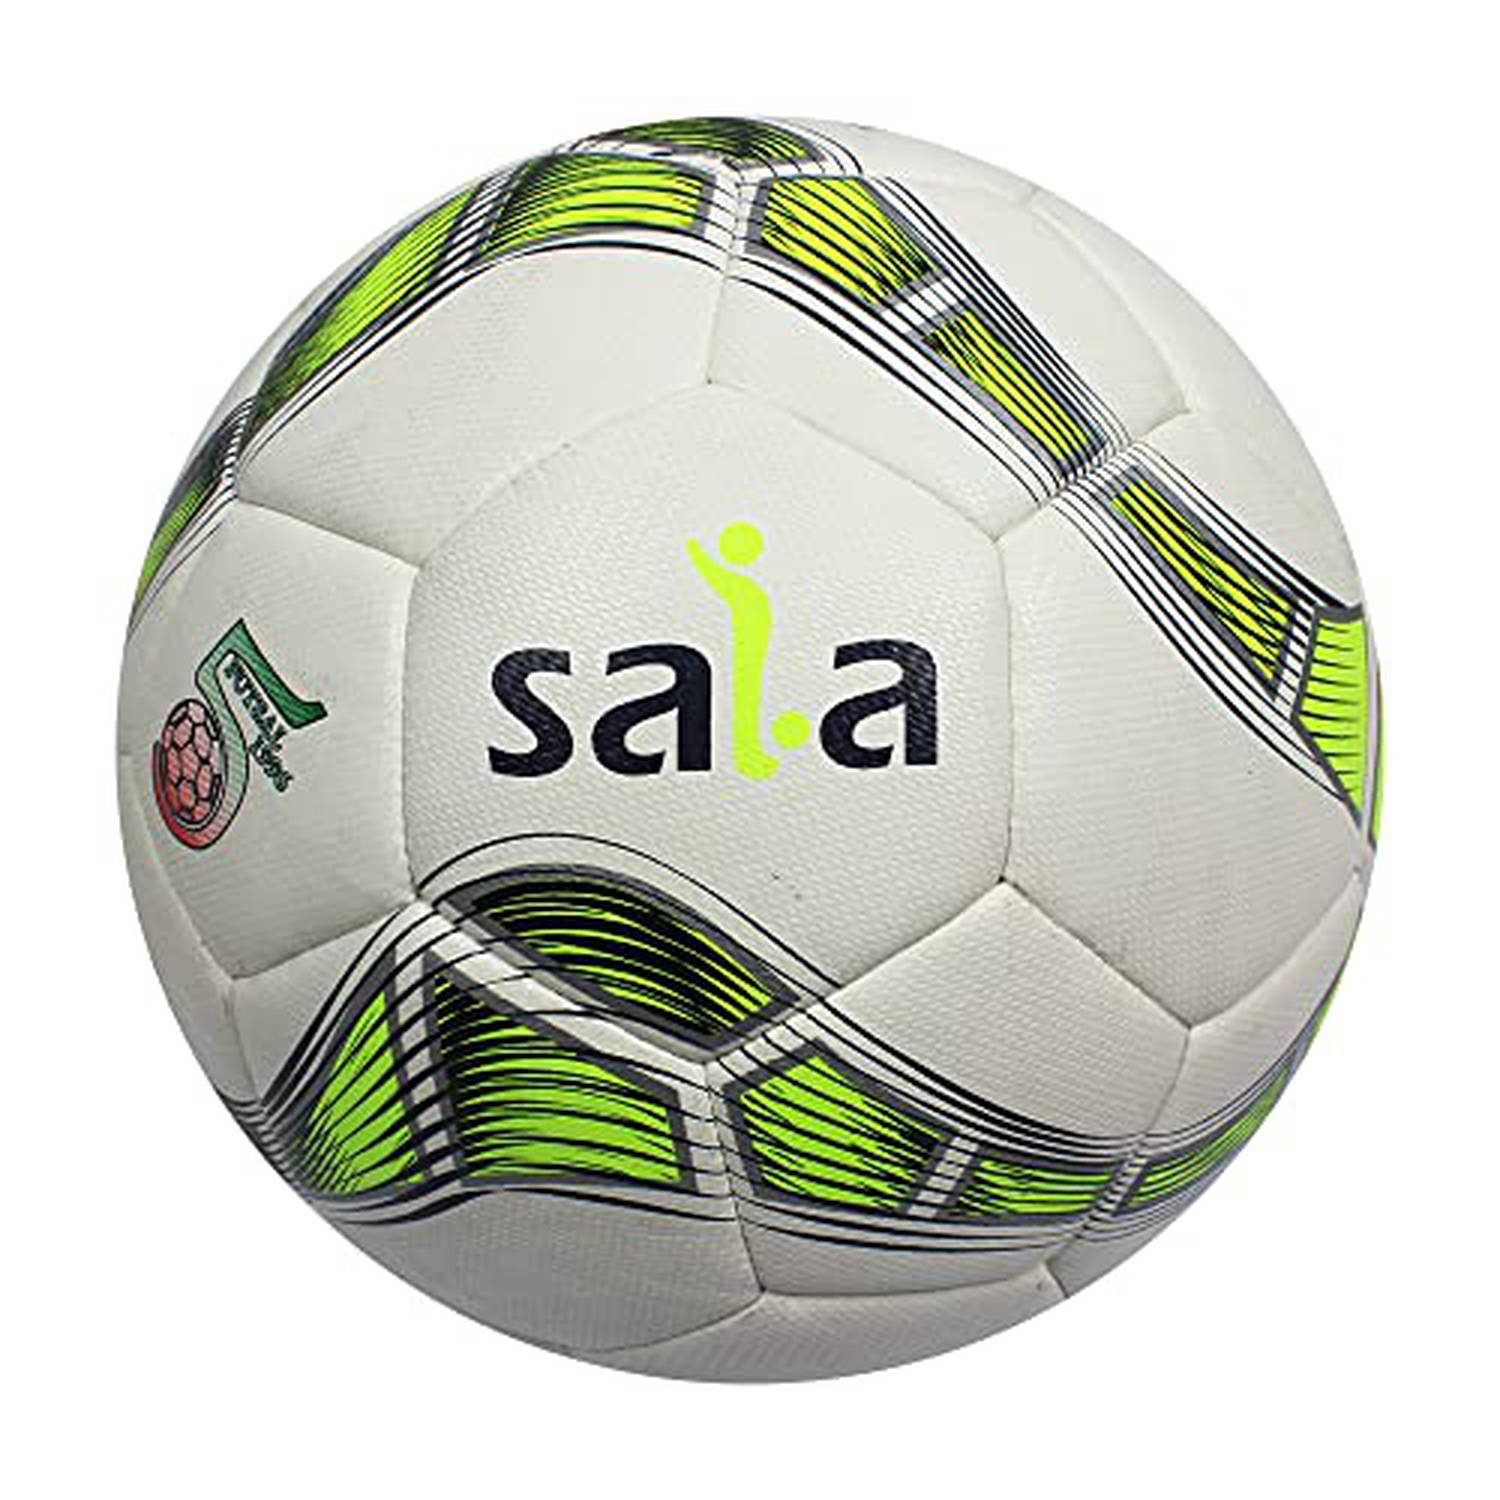 Ballon de foot indoor futsal : Sporteus